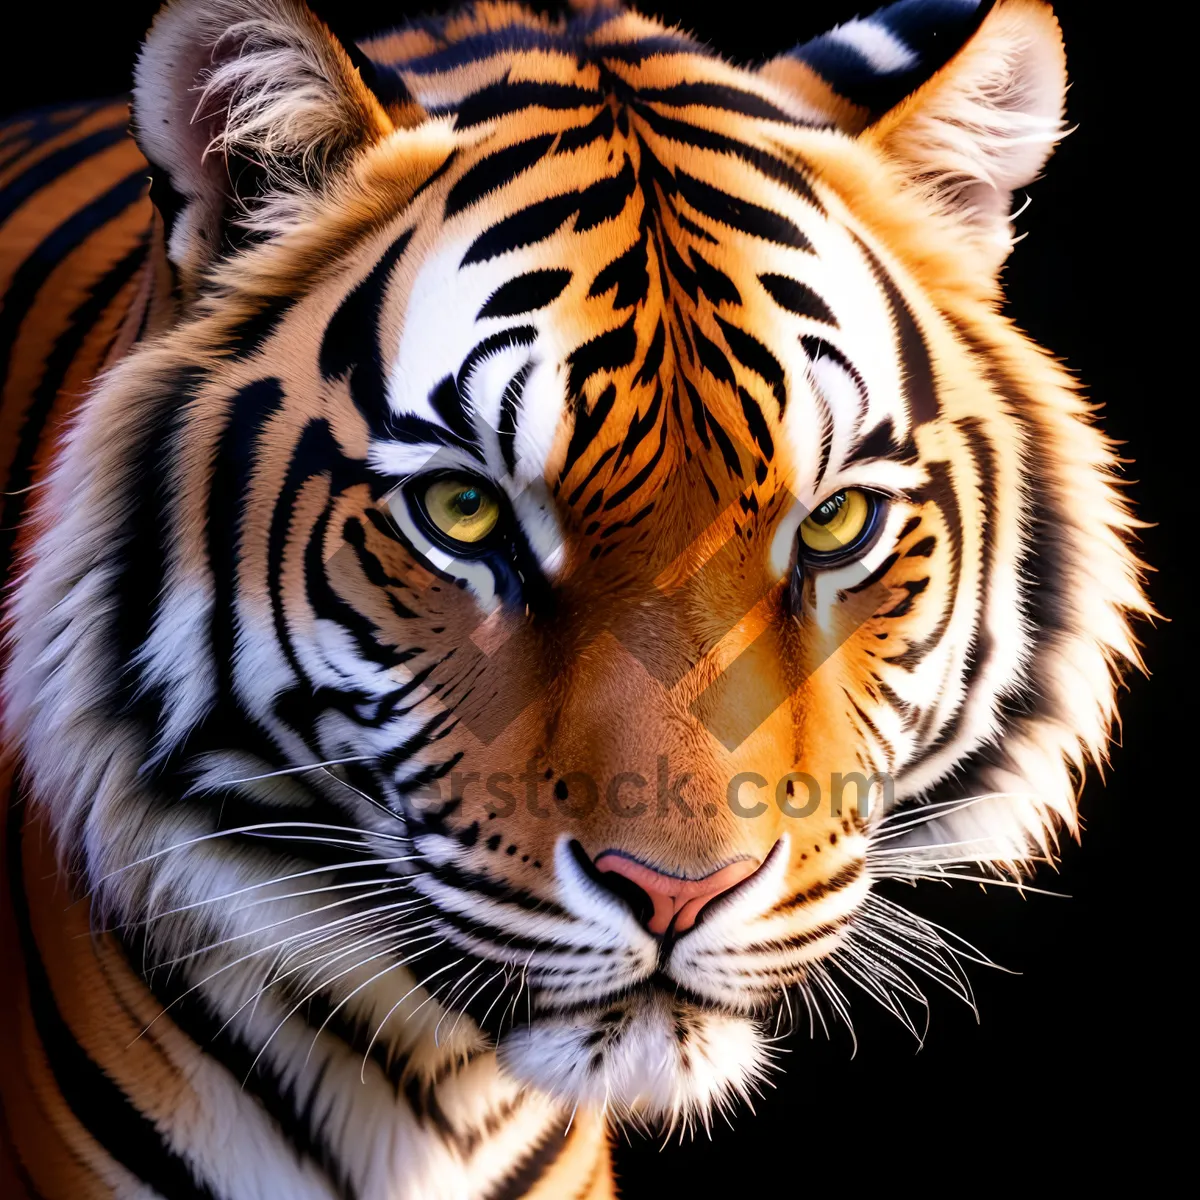 Picture of Wild Tiger Cat - Striped Feline Predator